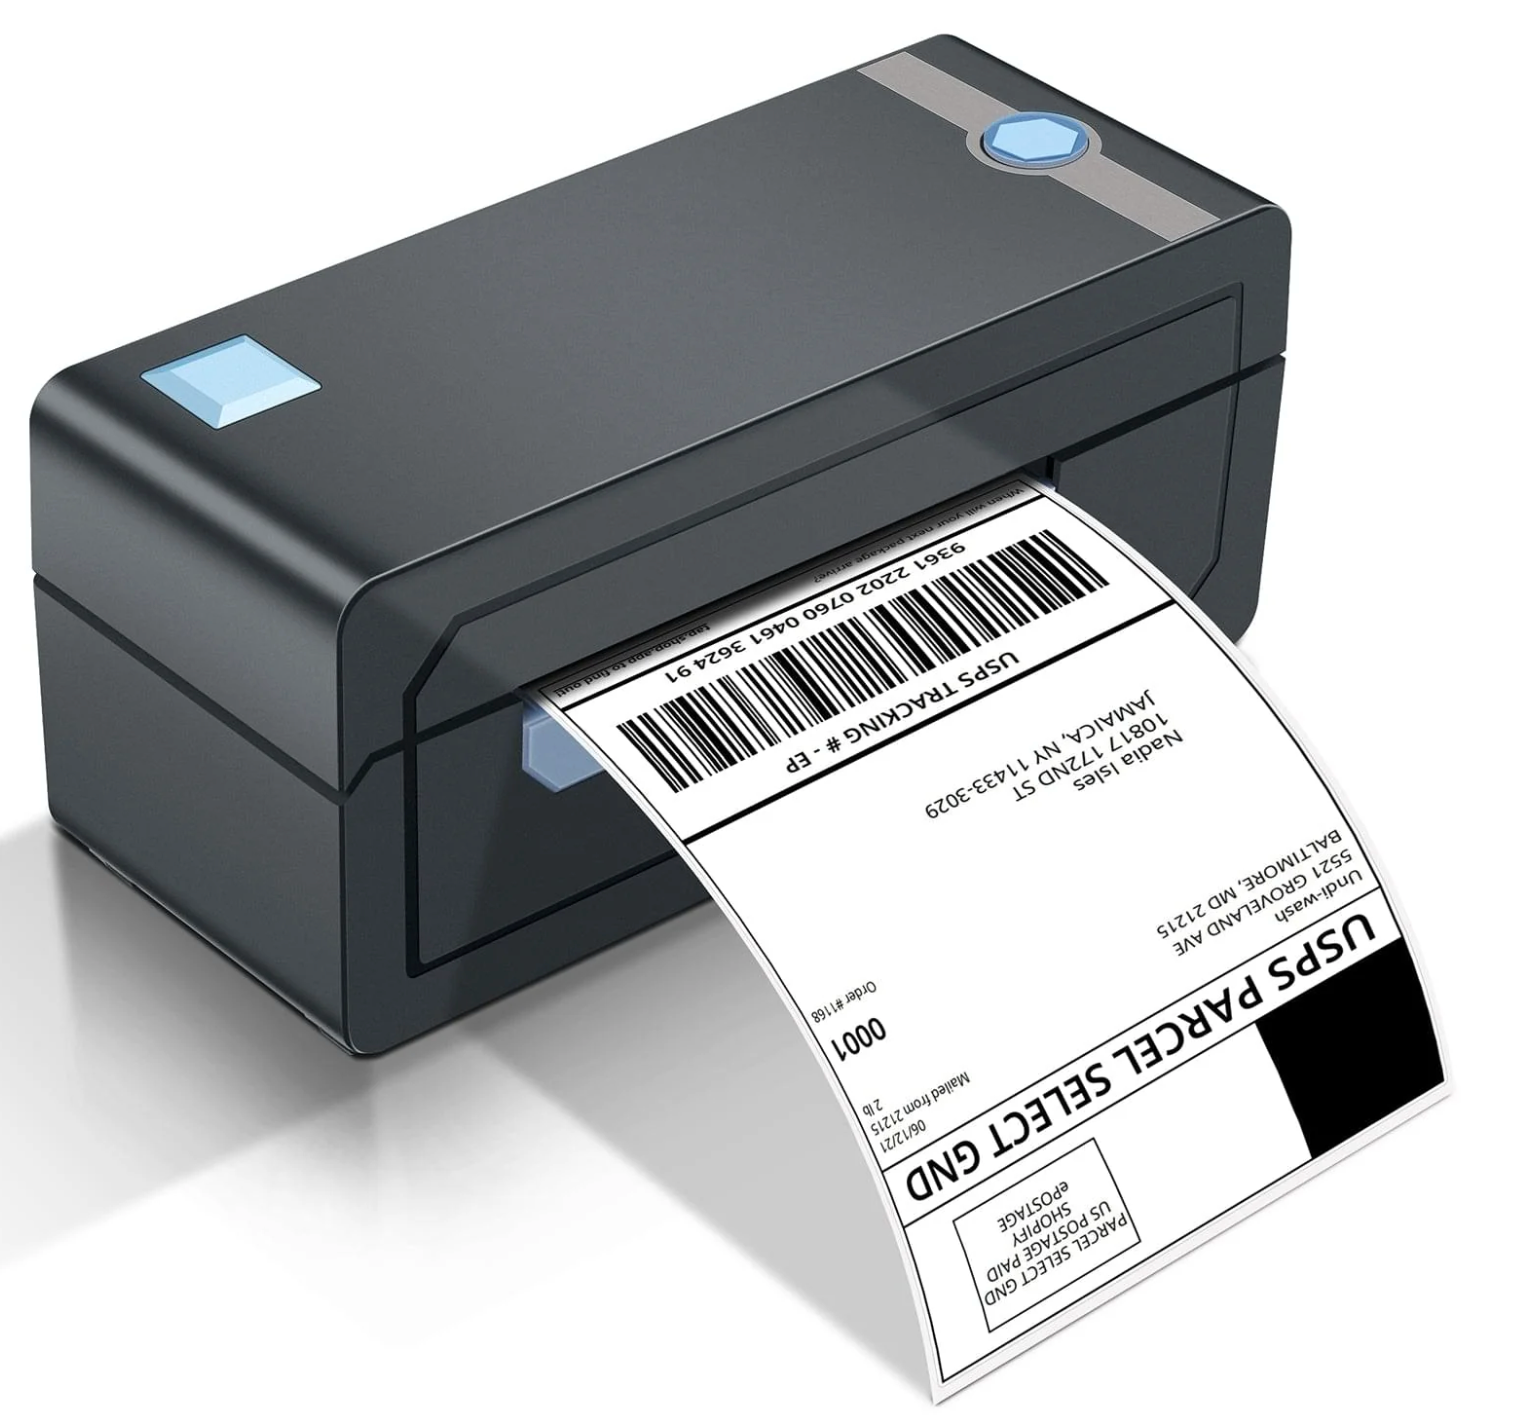 Image of Jadens Thermal Label printer.